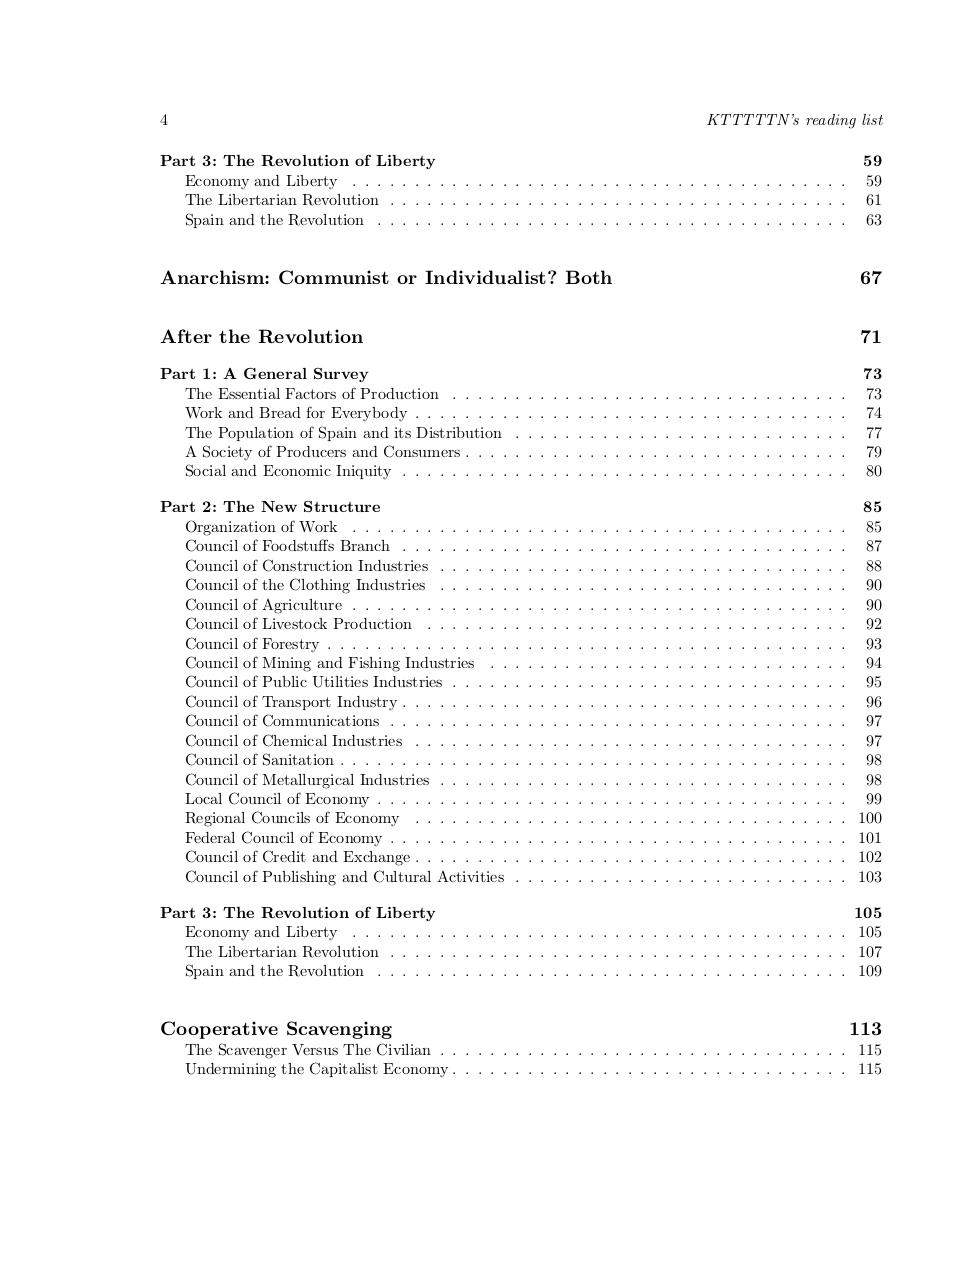 ktttn reading list.pdf - page 4/528